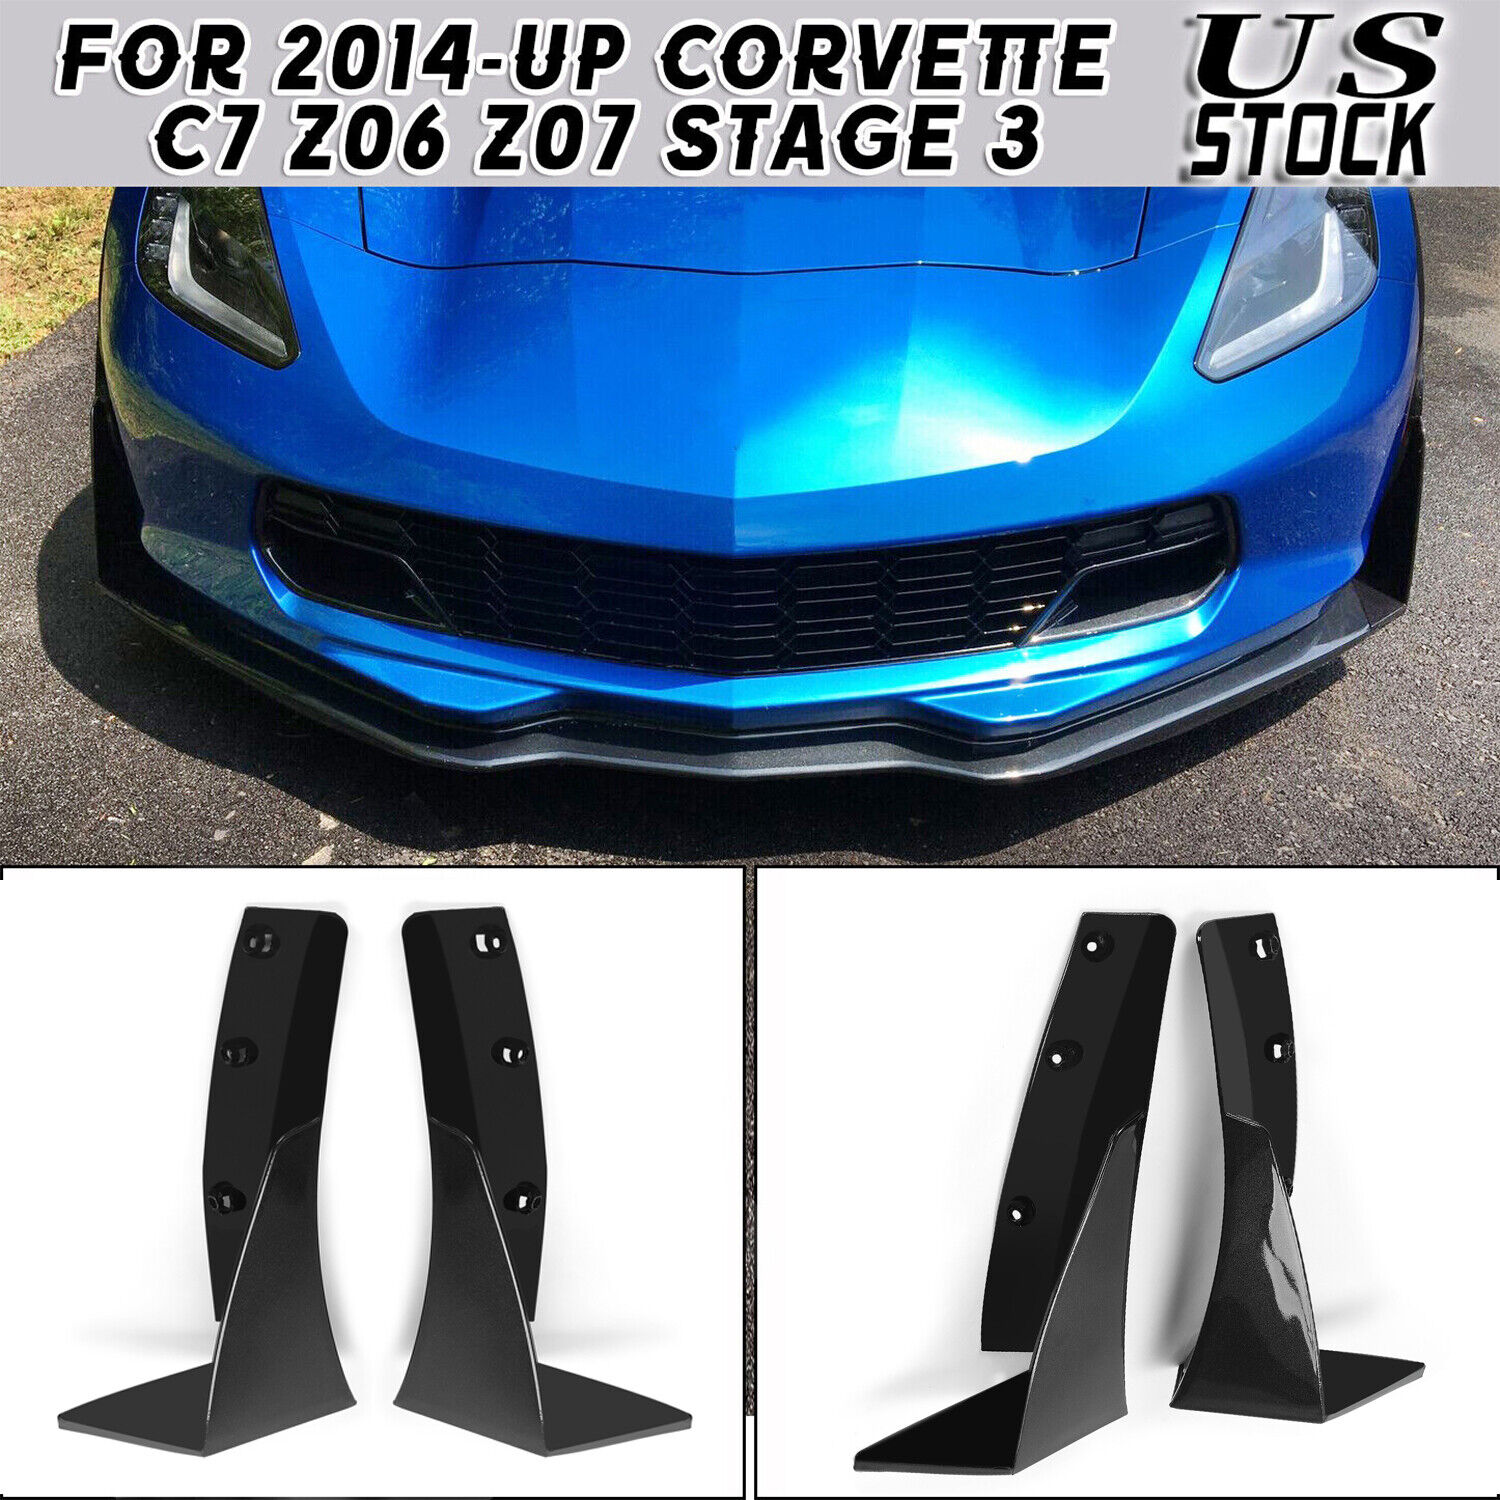 Front Side Splitter Extension Winglets for Corvette C7 Z06 Z07 Stage 3 2014-Up